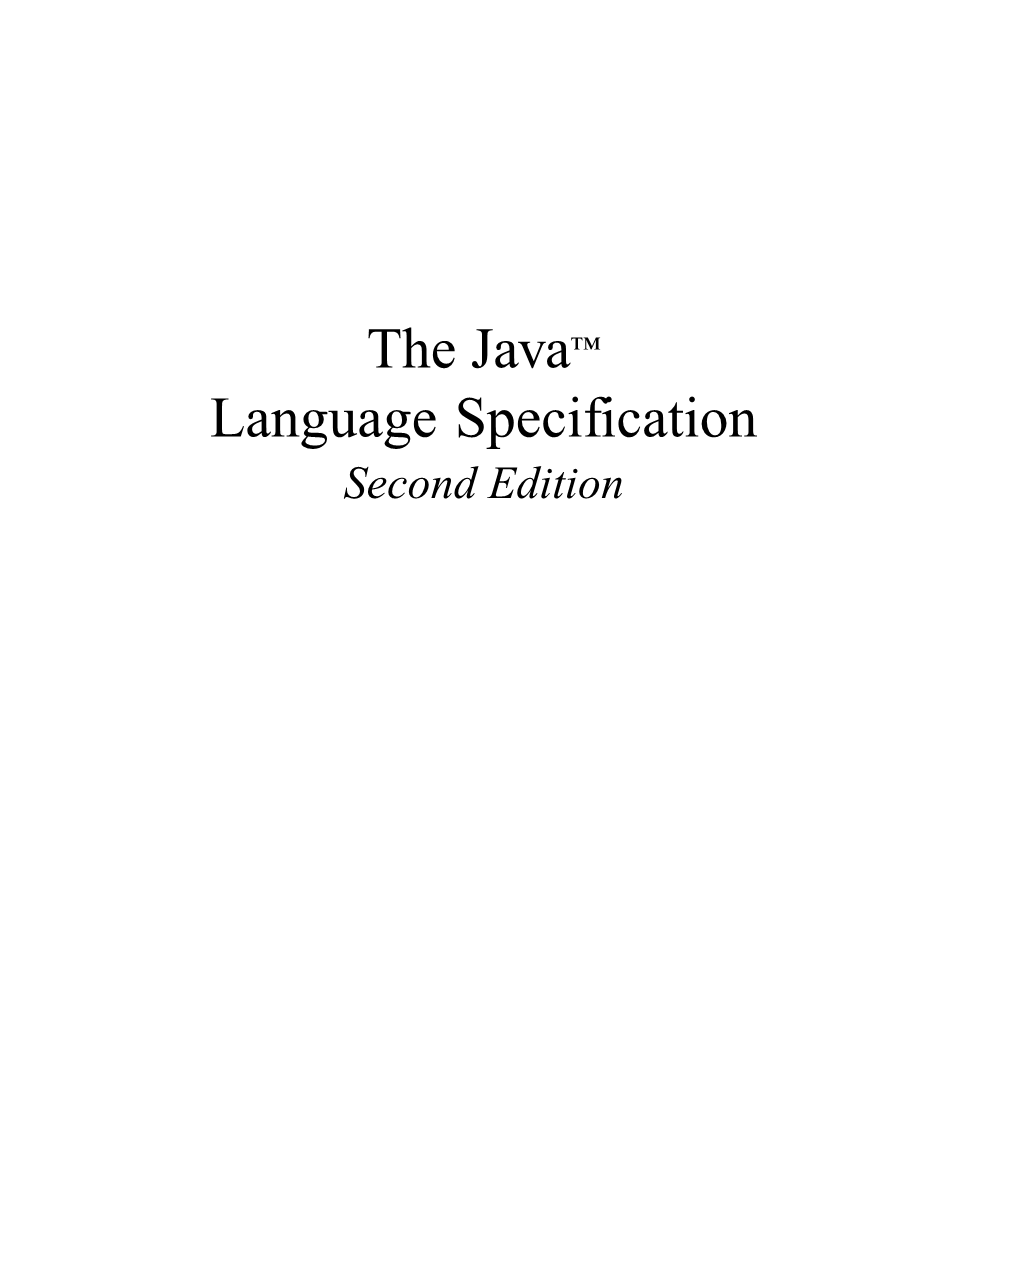 The Java™ Language Specification Second Edition the Java™ Series Lisa Friendly, Series Editor Bill Joy, Technical Advisor